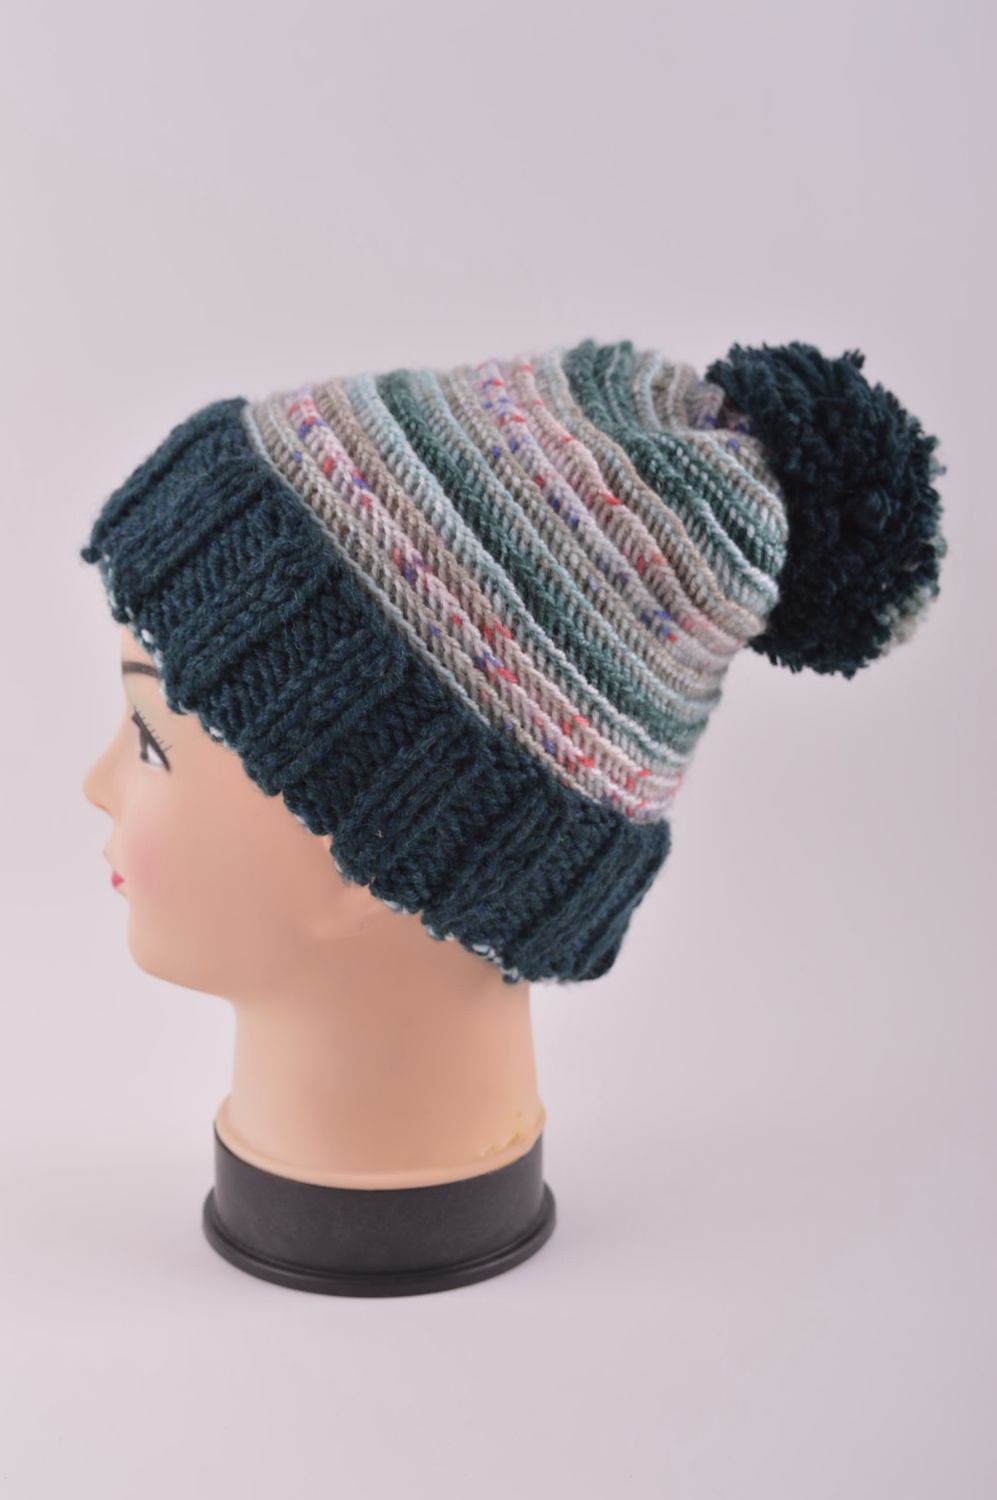 Handmade knitted hat designer hat for women winter accessories for girls photo 3